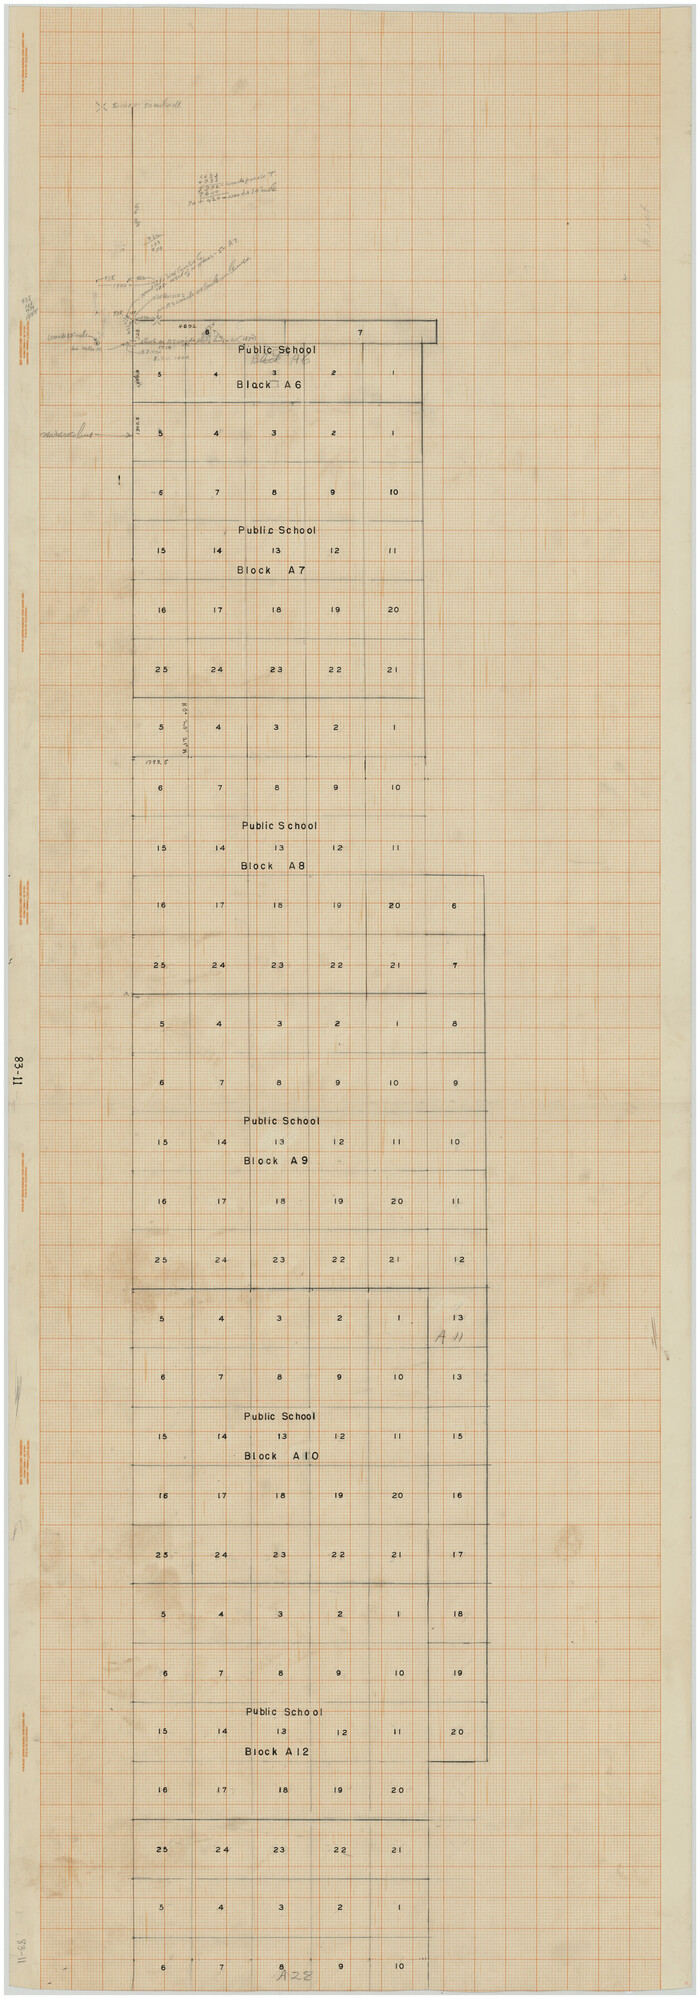 89780, [PSL Blocks A6-A12], Twichell Survey Records